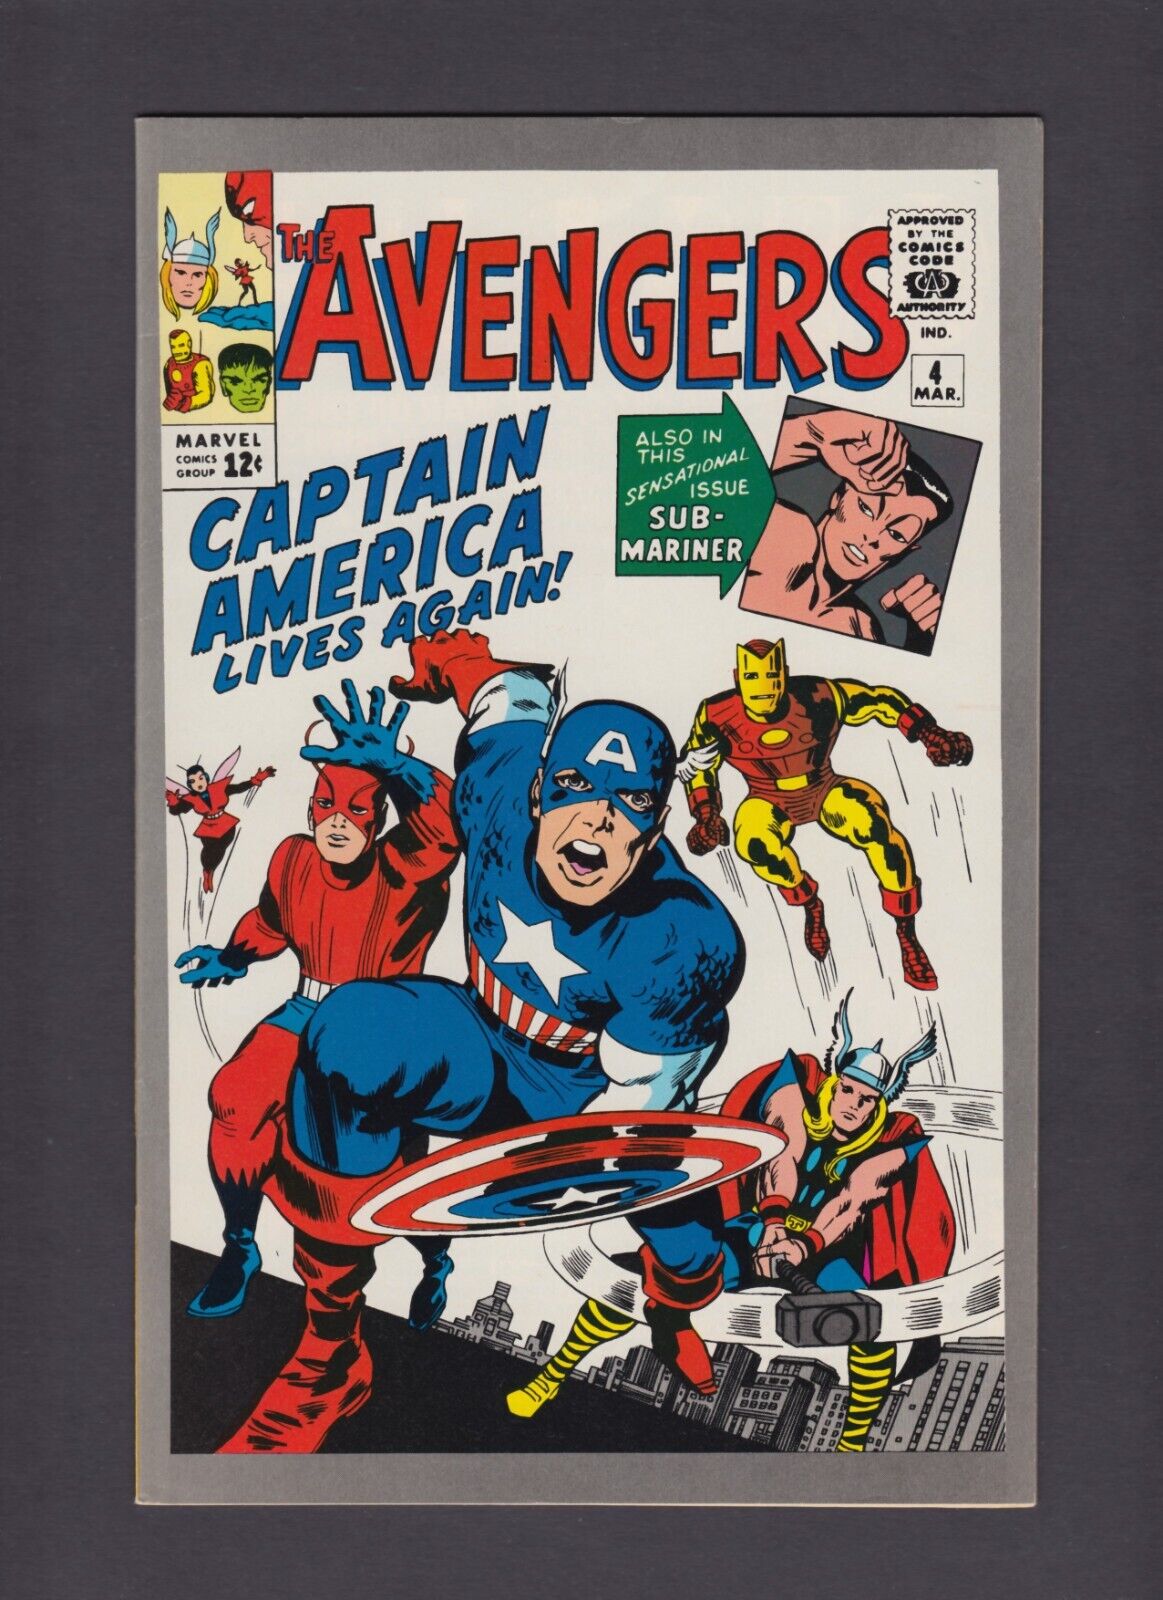 Avengers #4 JC Penney 1993 Reprint of 1st appearance of Captain America